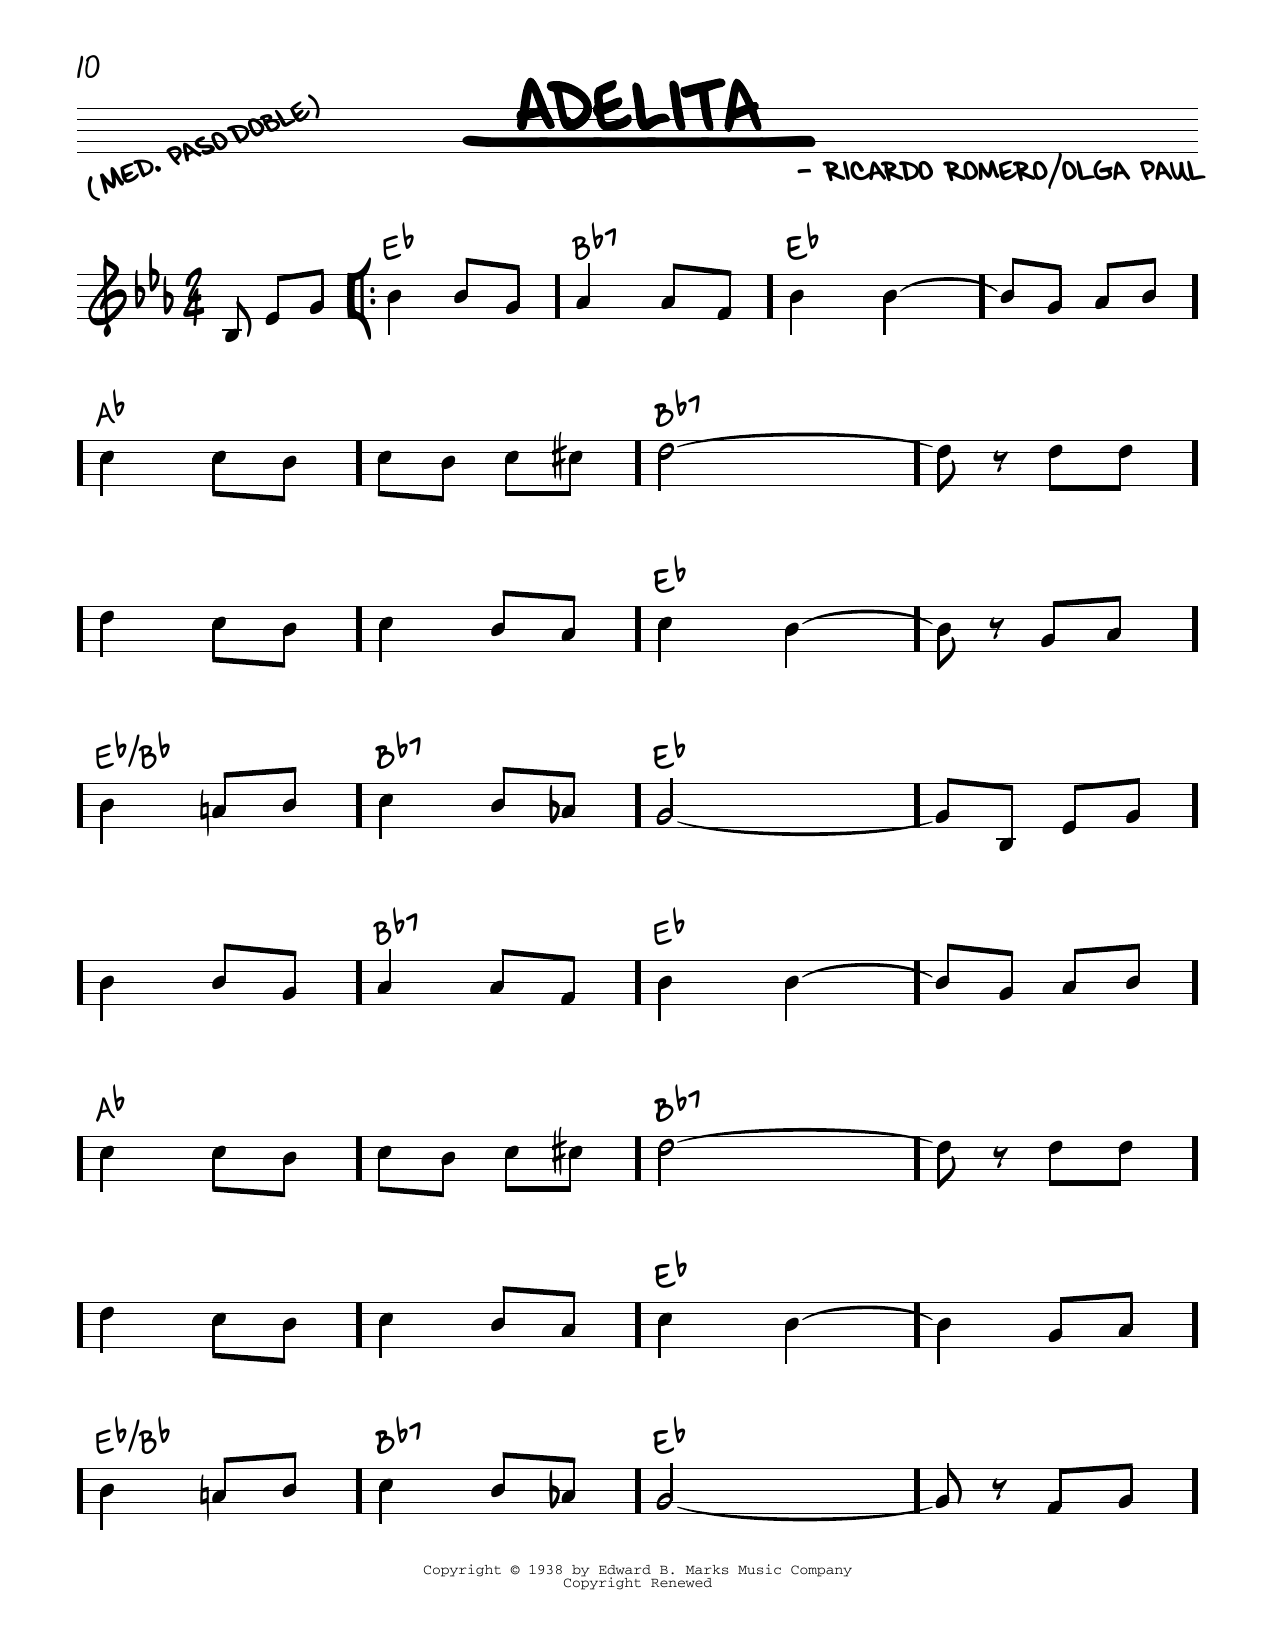 Olga Paul Adelita Sheet Music Notes & Chords for Real Book – Melody & Chords - Download or Print PDF